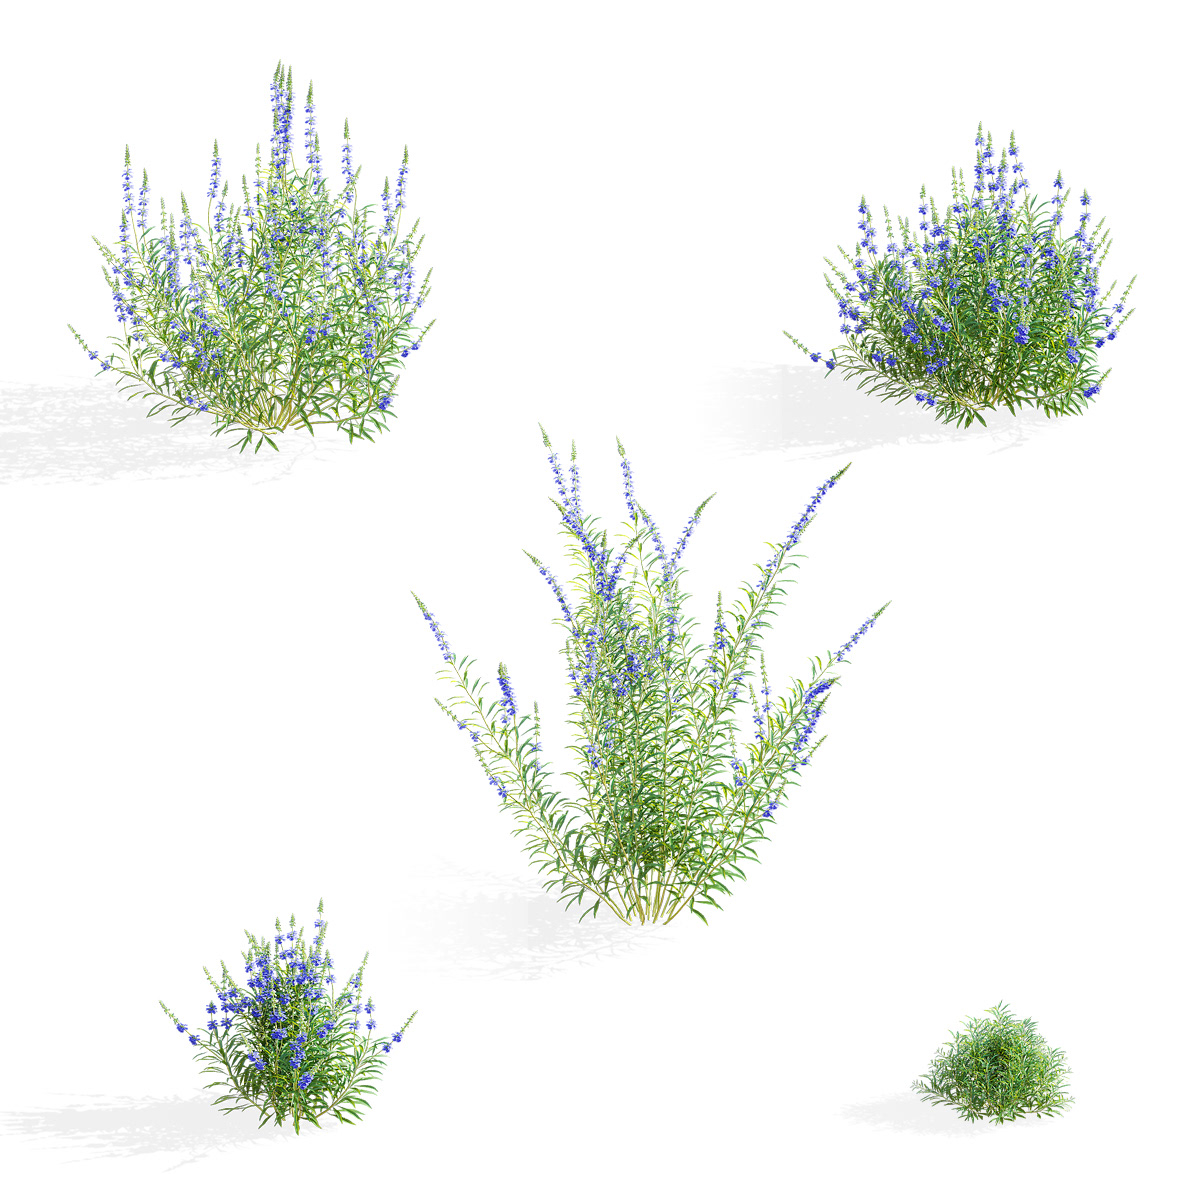 3D 3ds max 3d modeling Flowers salvia Render visualization exterior archviz CGI